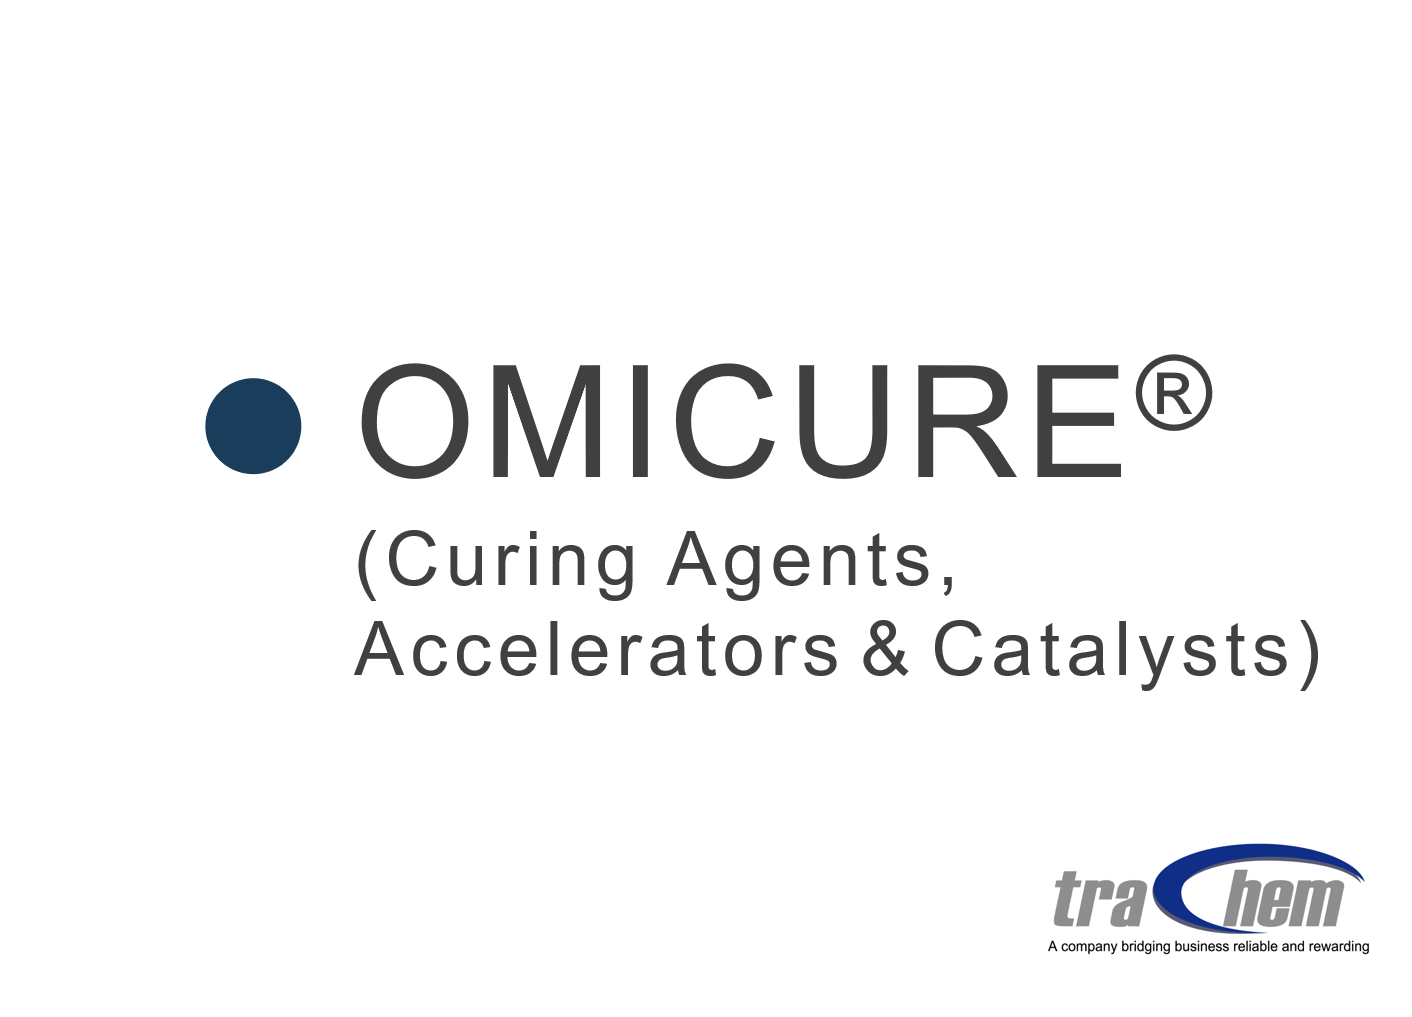 OMICURE® (Curing Agents, Accelerators & Catalysts)